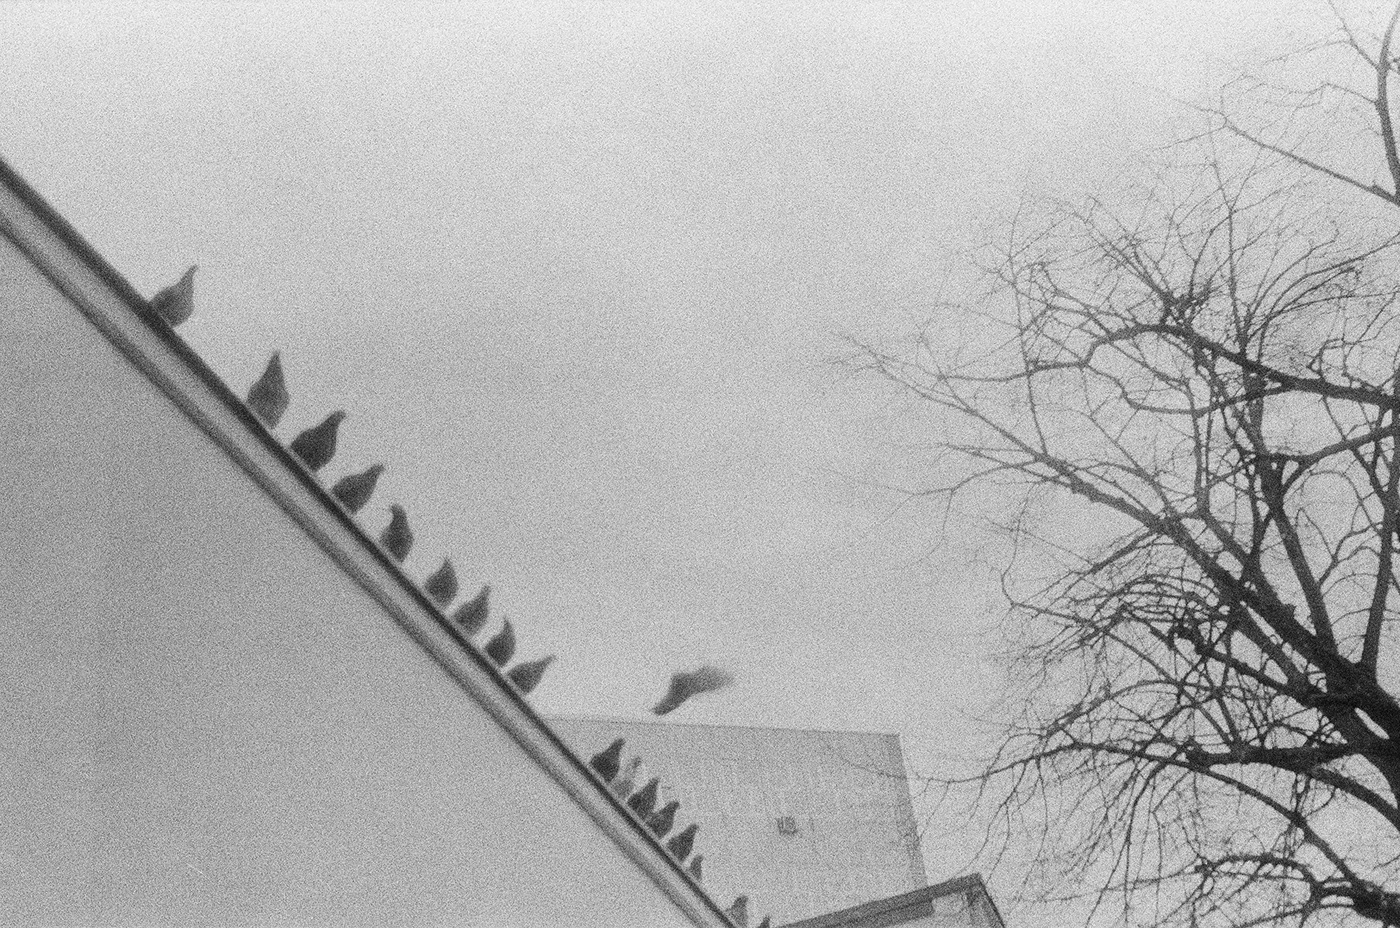 black and white 35mm 35mmfilm Zagreb street photography Croatia Urban analog photography portrait